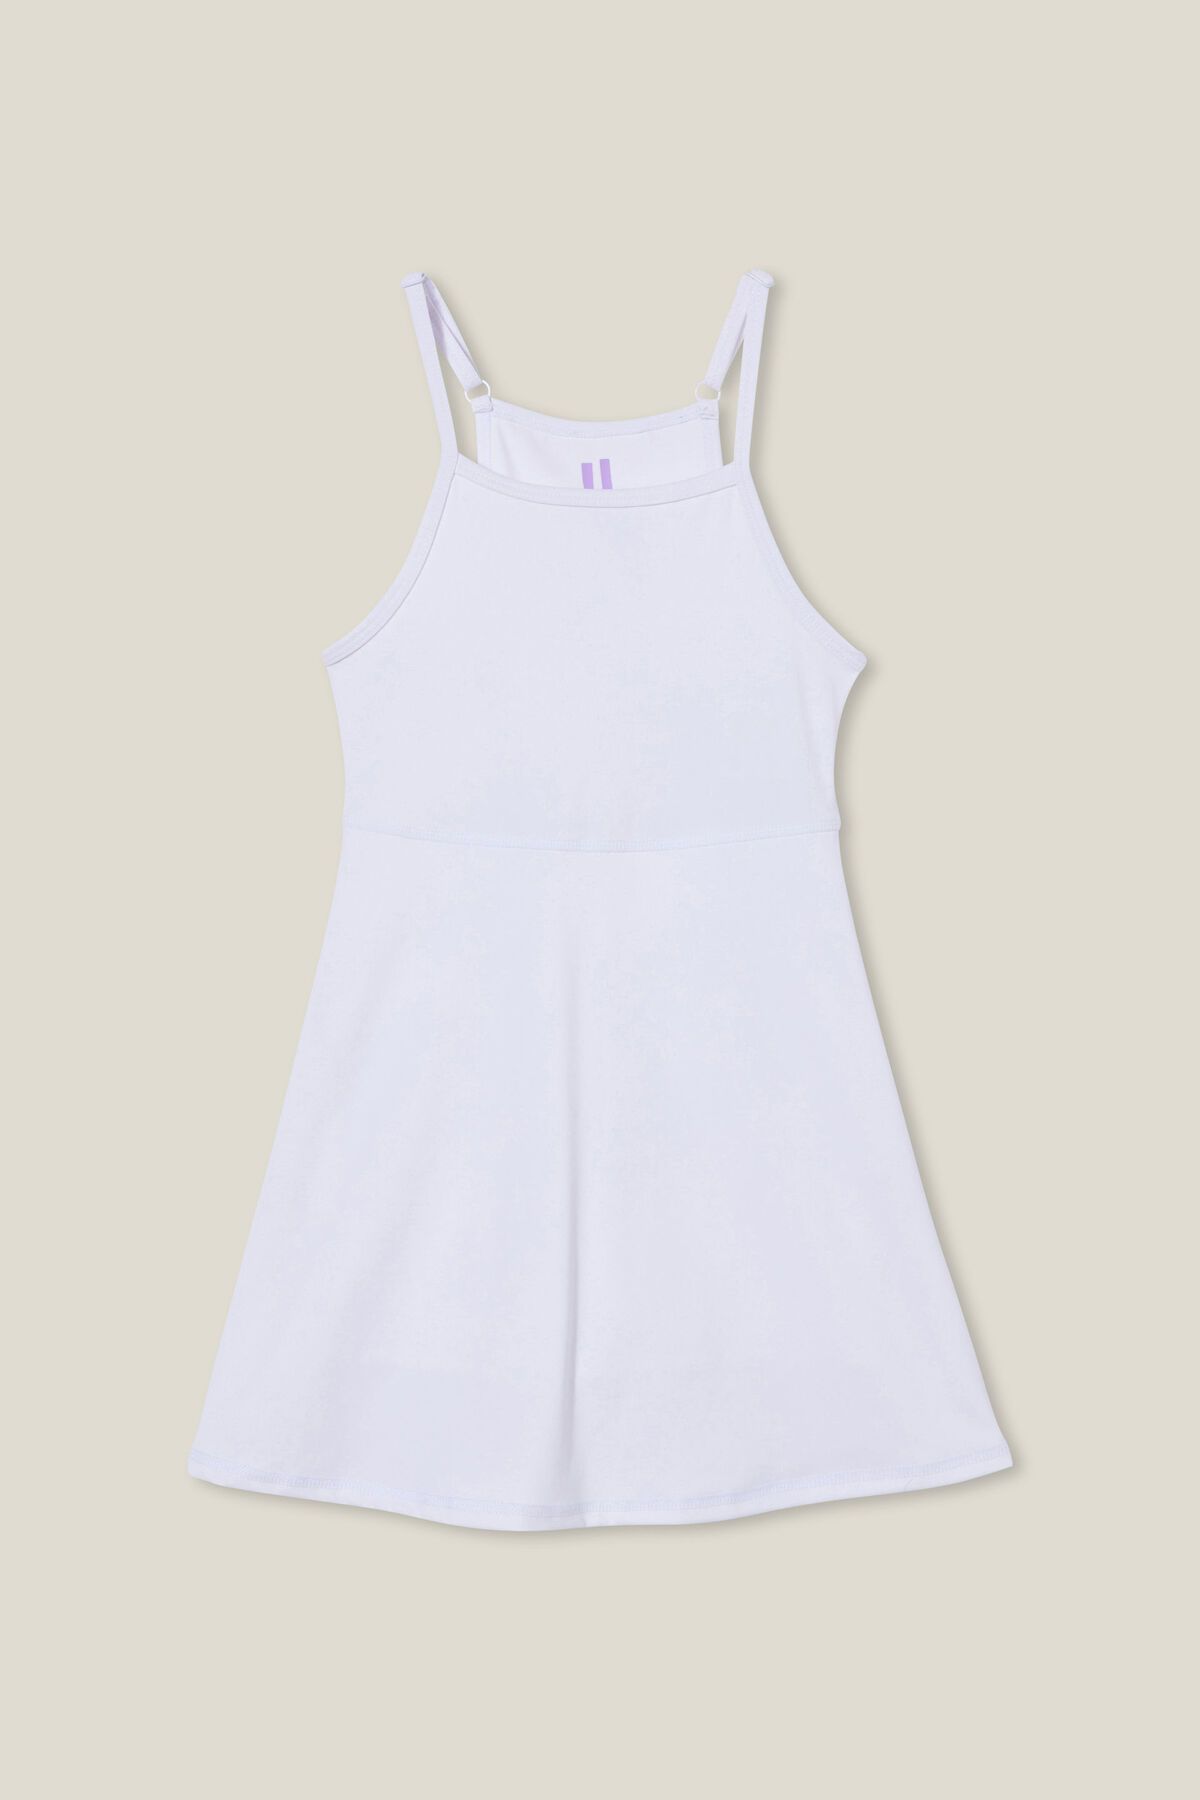 Edith Tennis Dress | Cotton On (US)